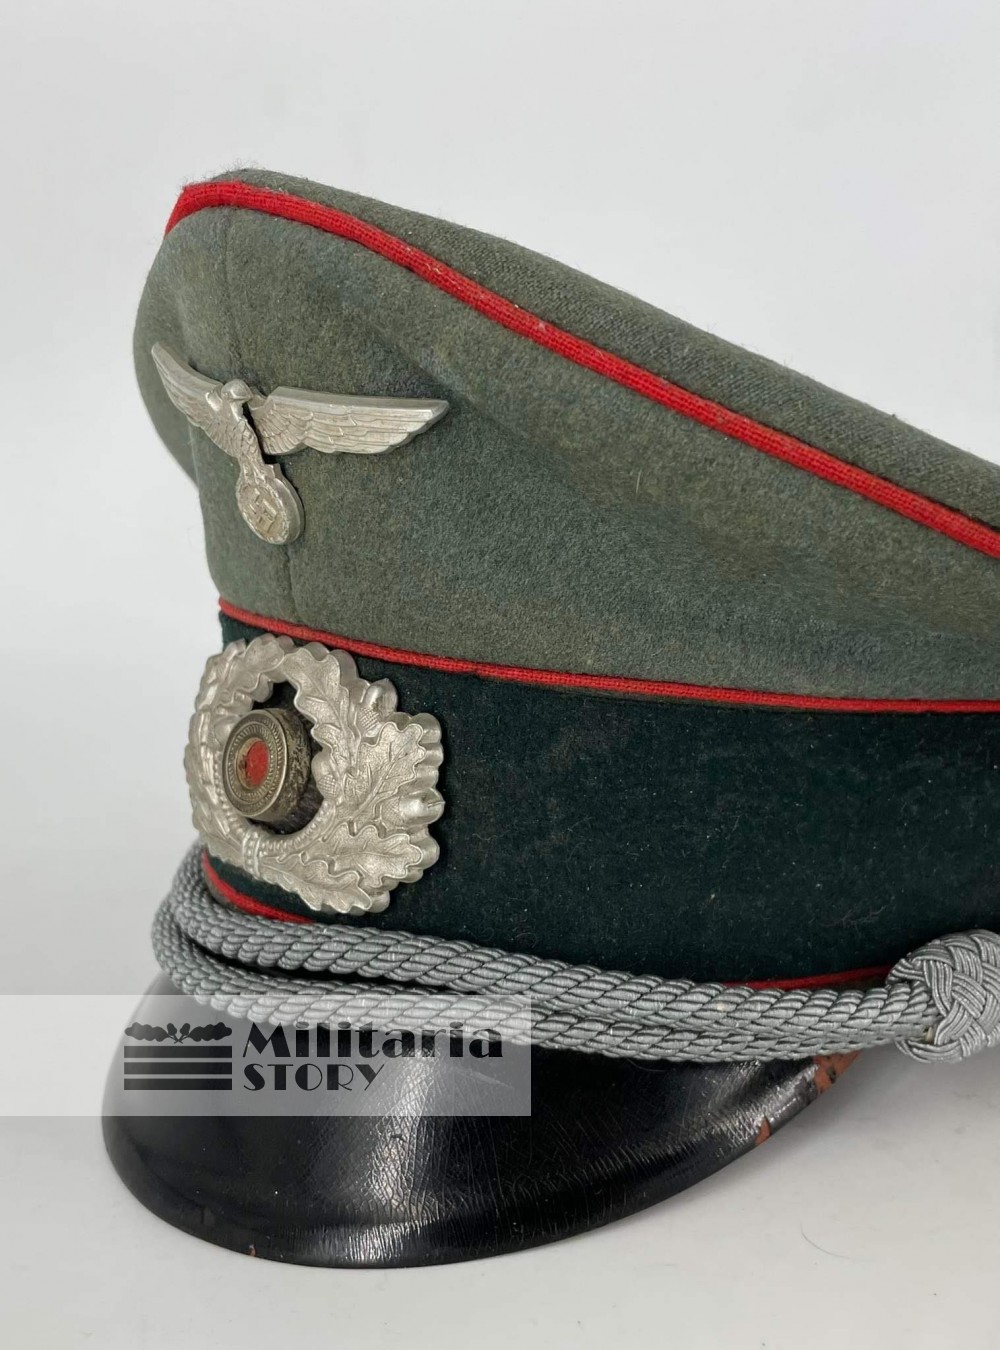 Heer Officer Artilerry visor cap - Heer Officer Artilerry visor cap: Third Reich Headgear